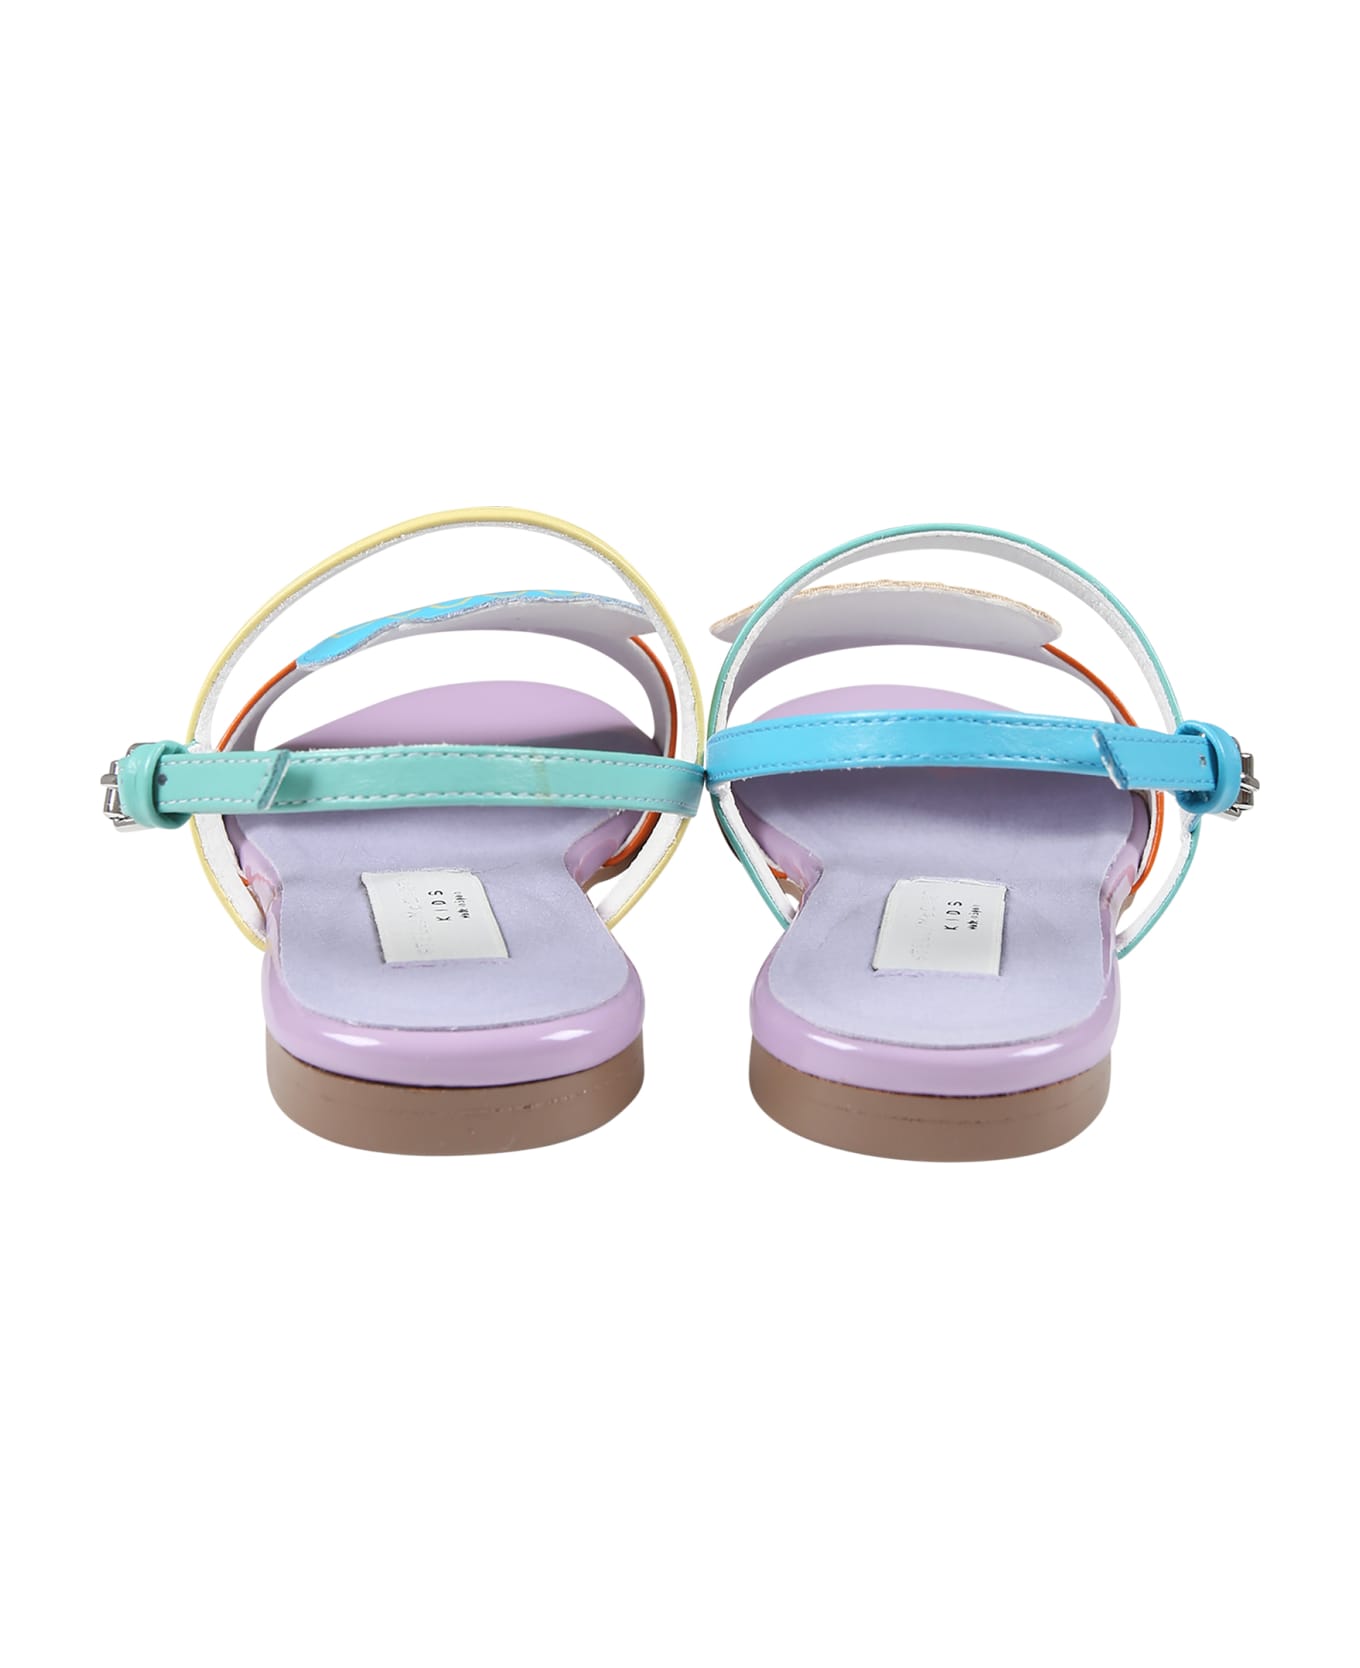 Stella McCartney Kids Multicolor Sandals For Girl With Seashell - Multicolor シューズ